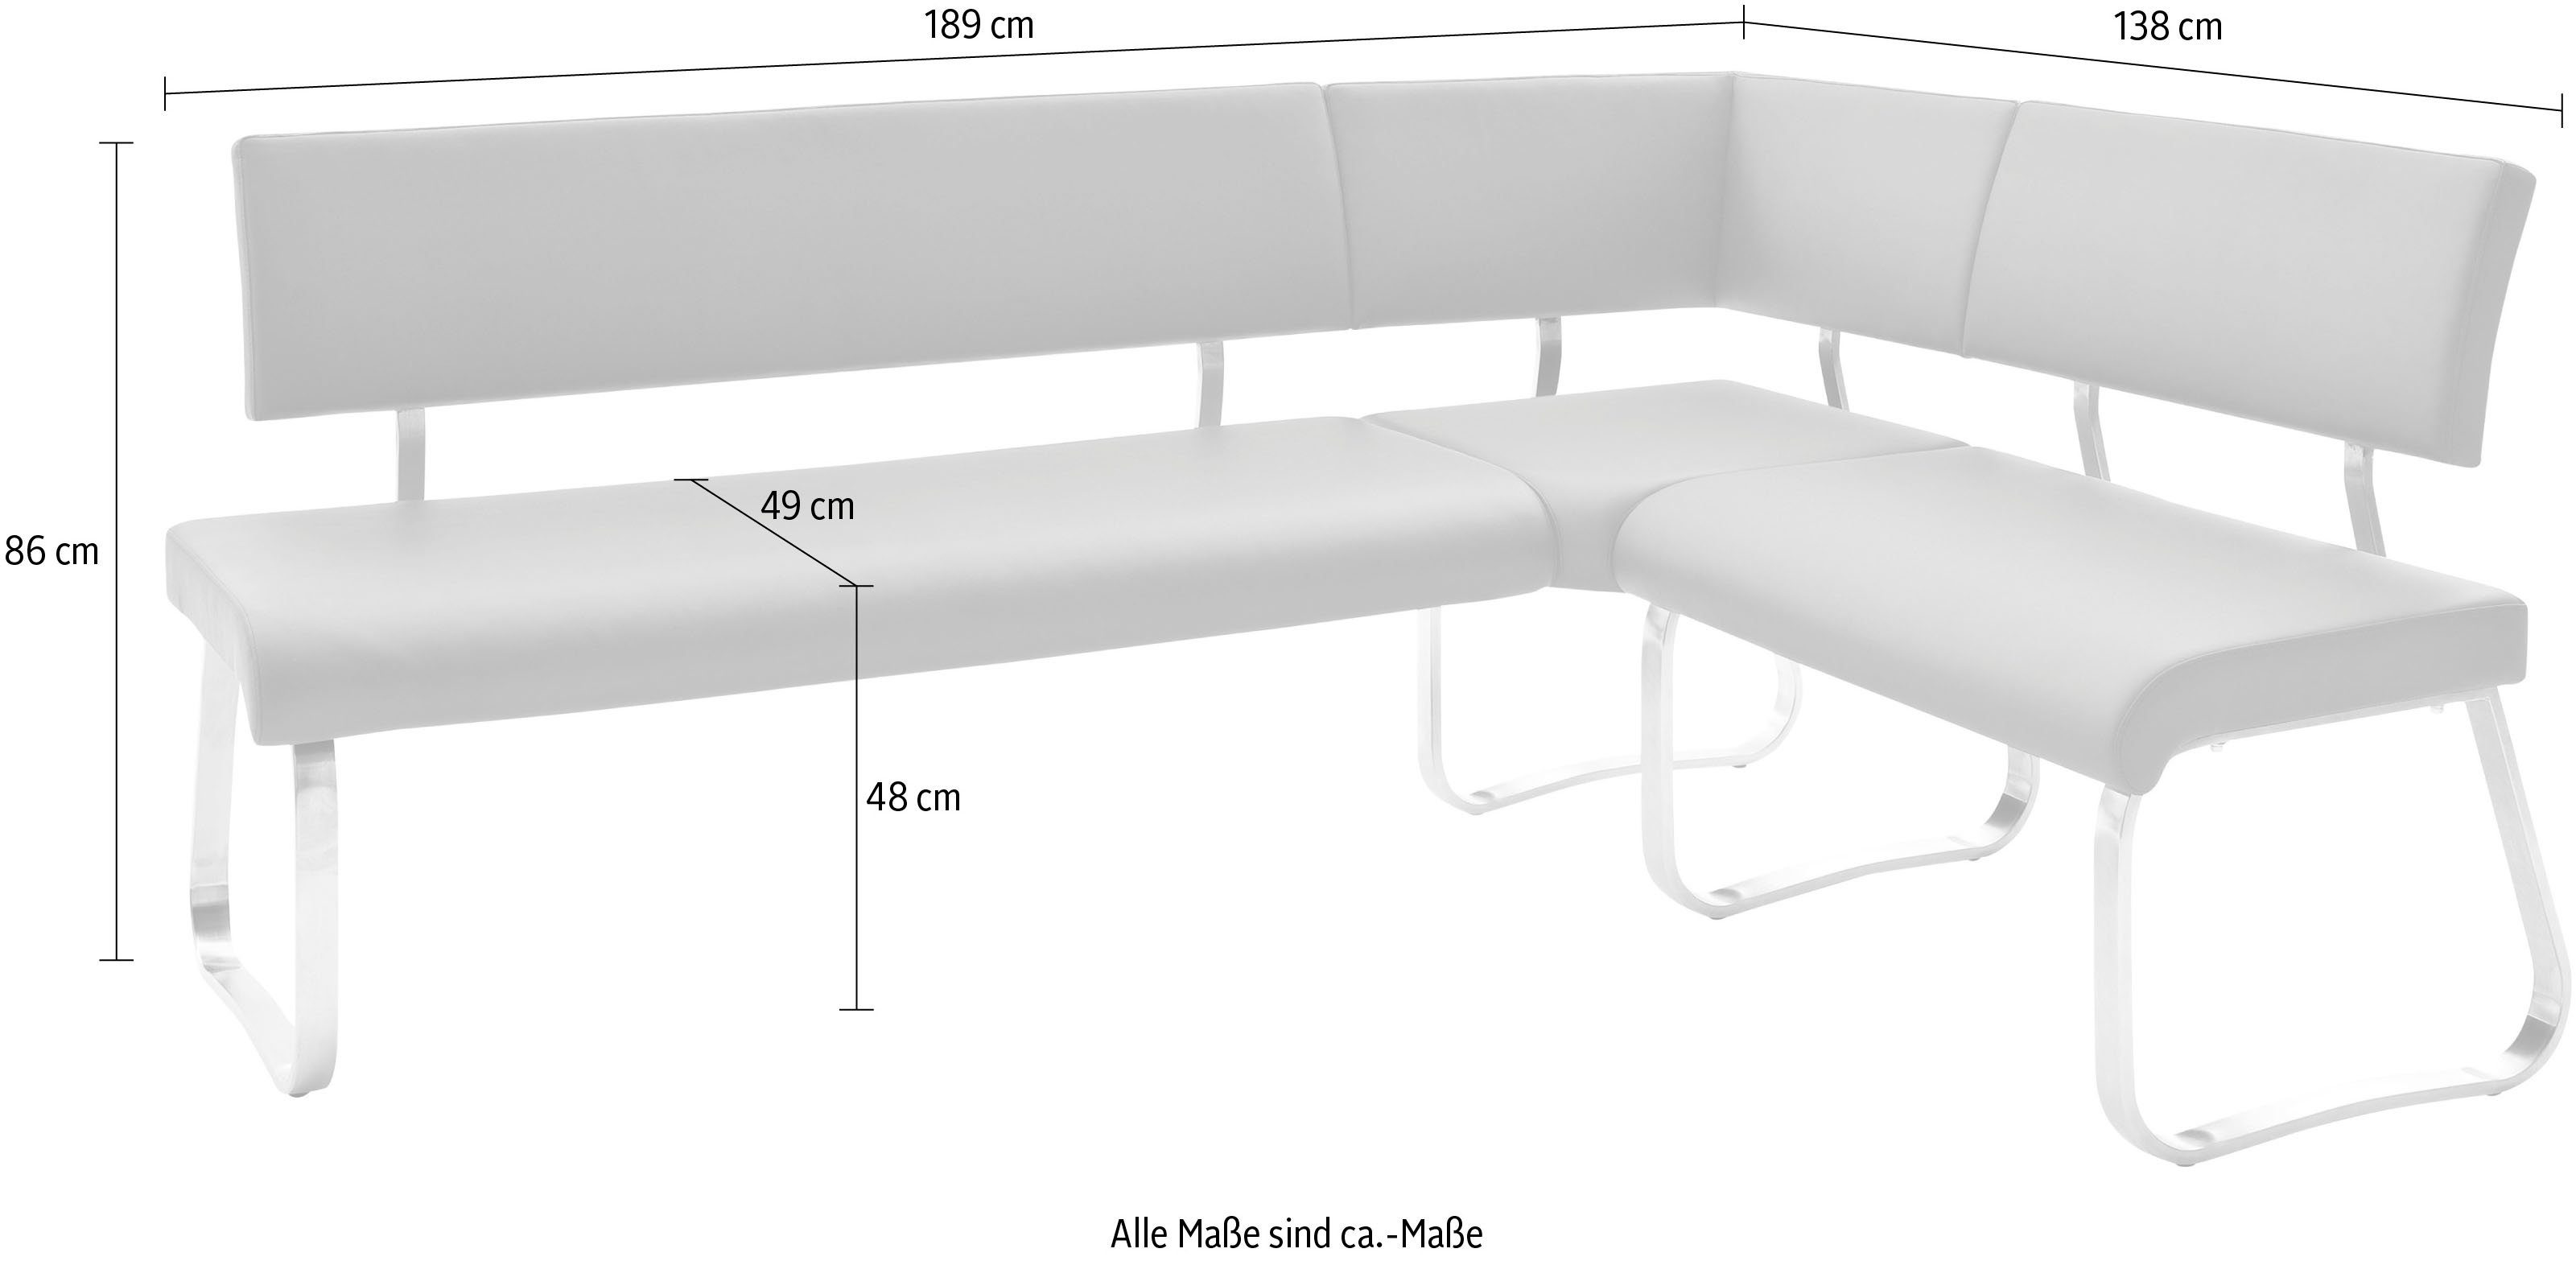 im MCA furniture 500 kg bis Breite frei Grau Arco, 200 belastbar Raum cm, Eckbank Eckbank stellbar,